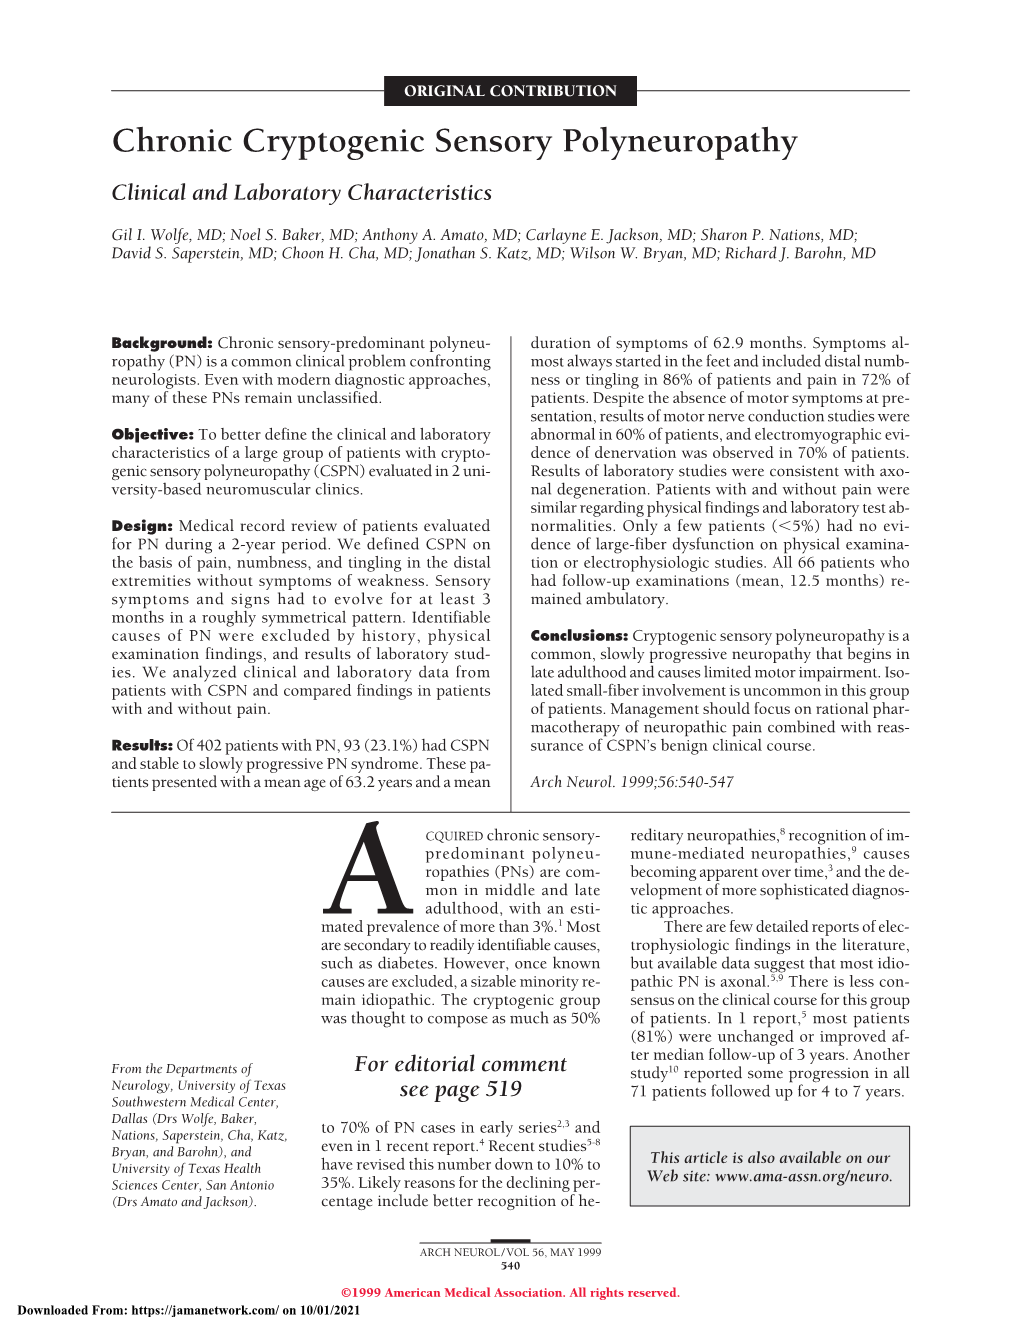 Chronic Cryptogenic Sensory Polyneuropathy Clinical and Laboratory Characteristics